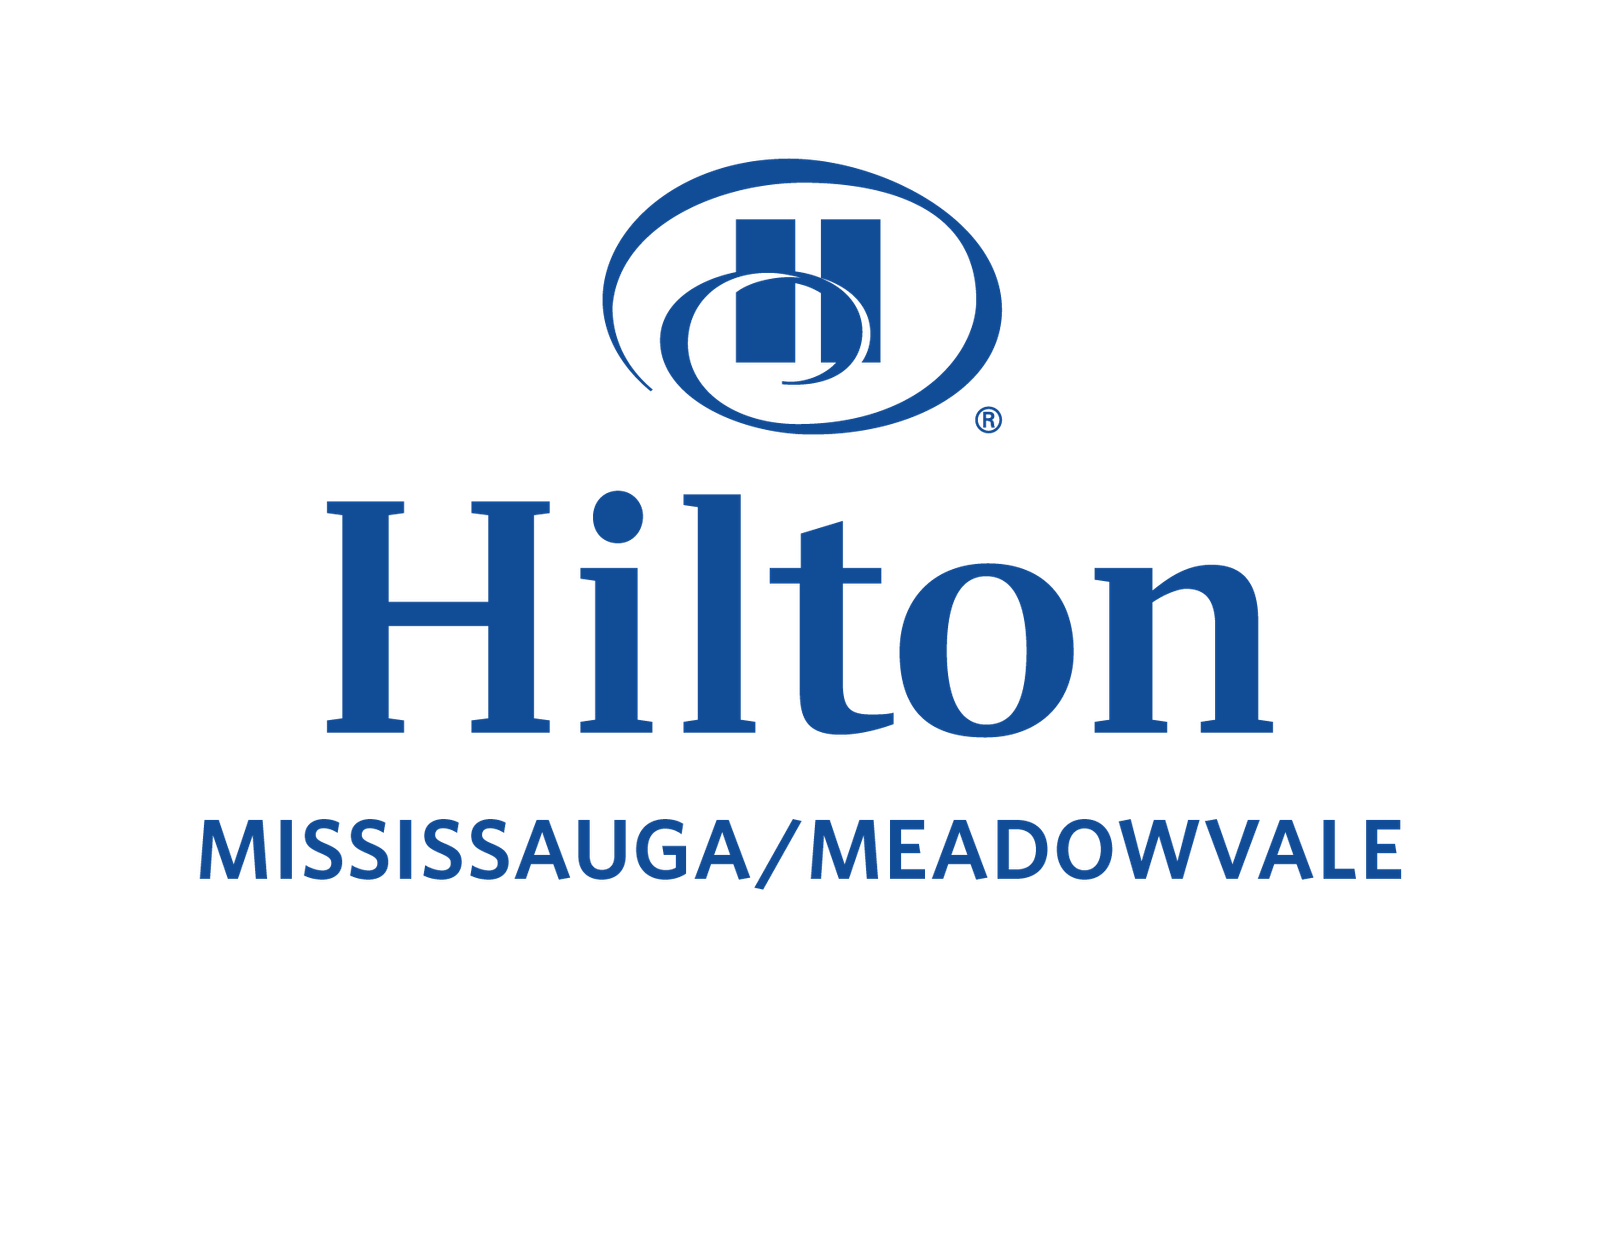 Hilton Mississauga logo